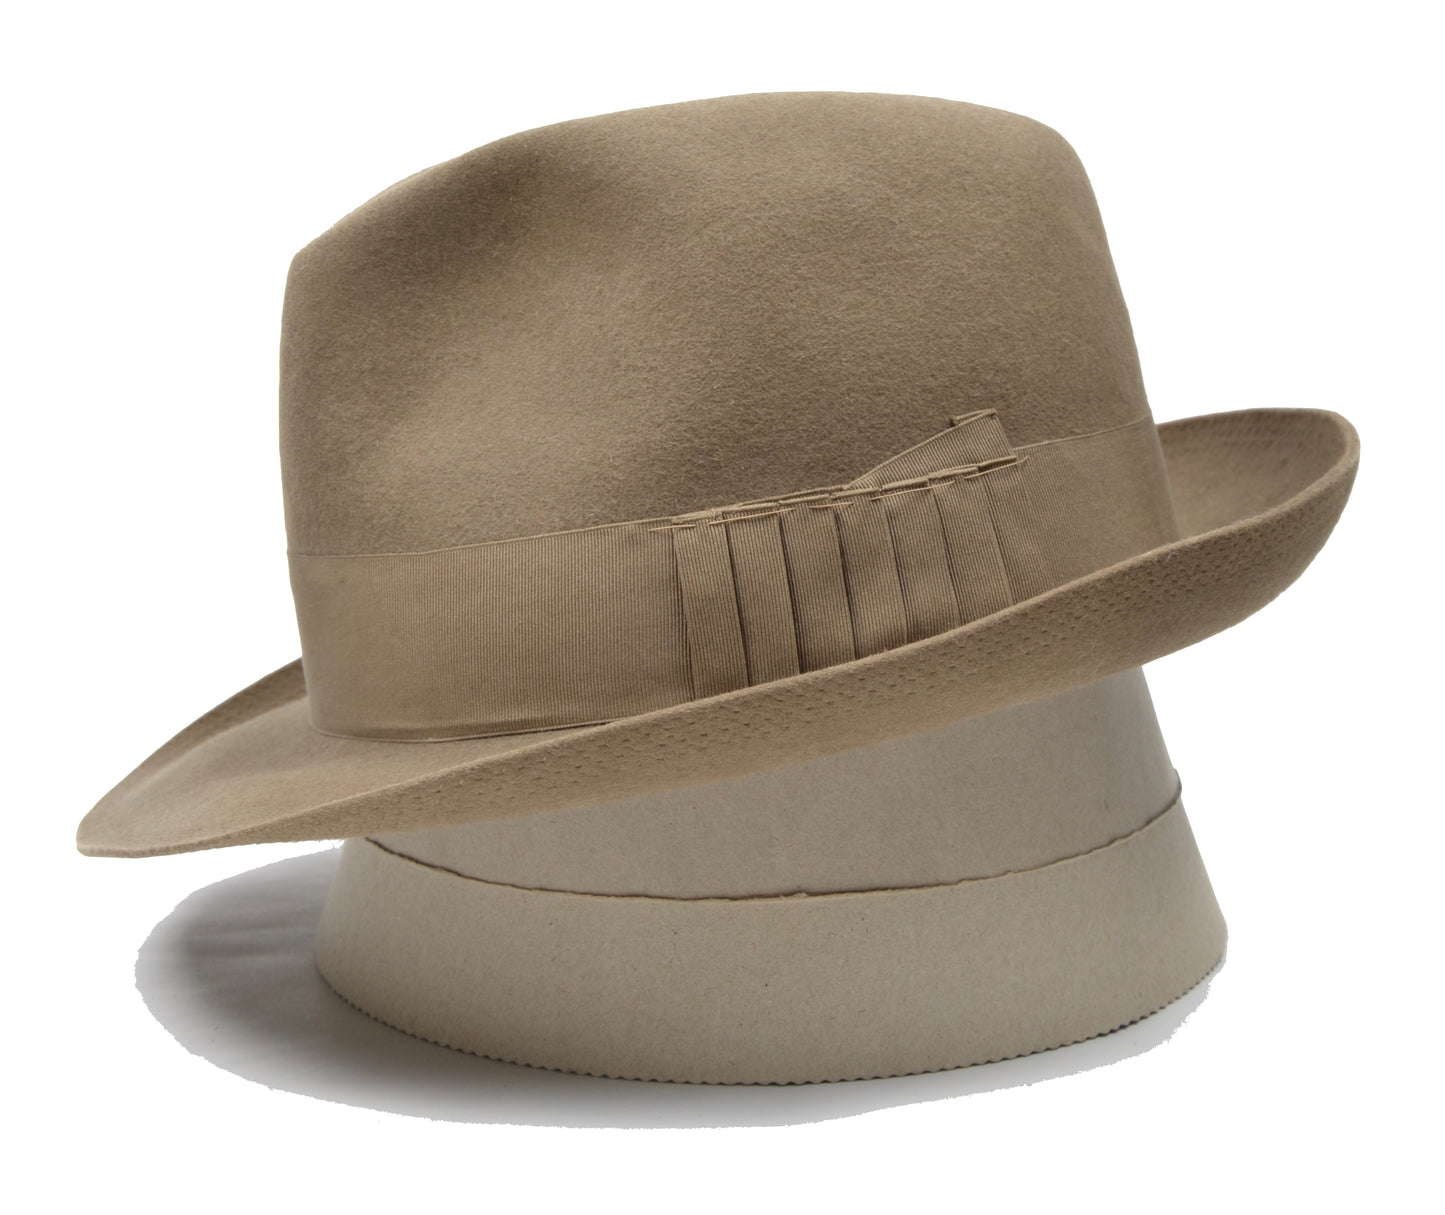 Vanzina x Borsalino Felt Hat Size 58 - Sand/Tan